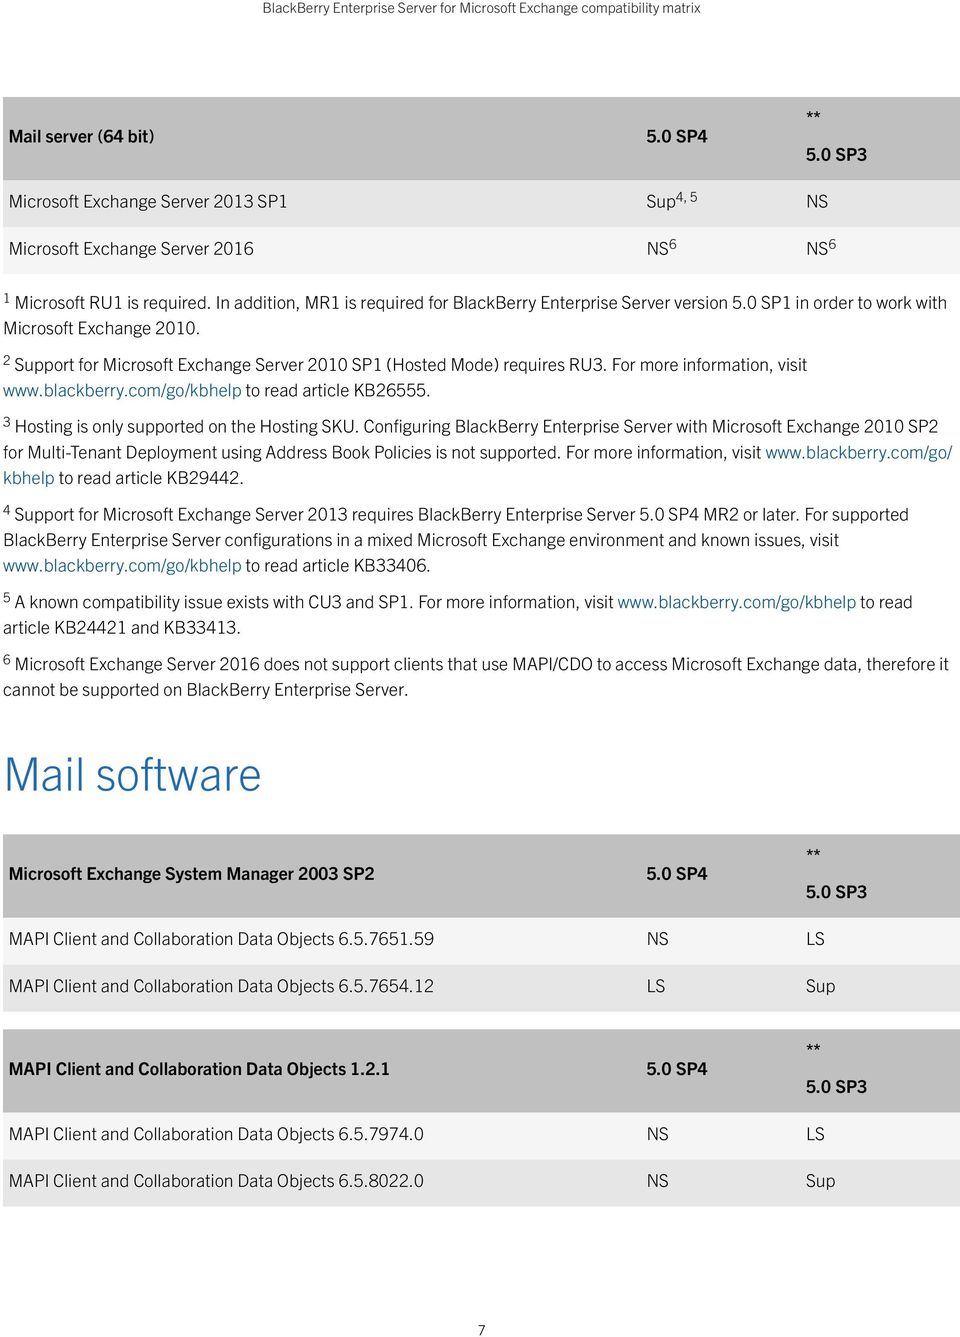 2 Support for Microsoft Exchange Server 2010 SP1 (Hosted Mode) requires RU3. For more information, visit www.blackberry.com/go/kbhelp to read article KB26555.